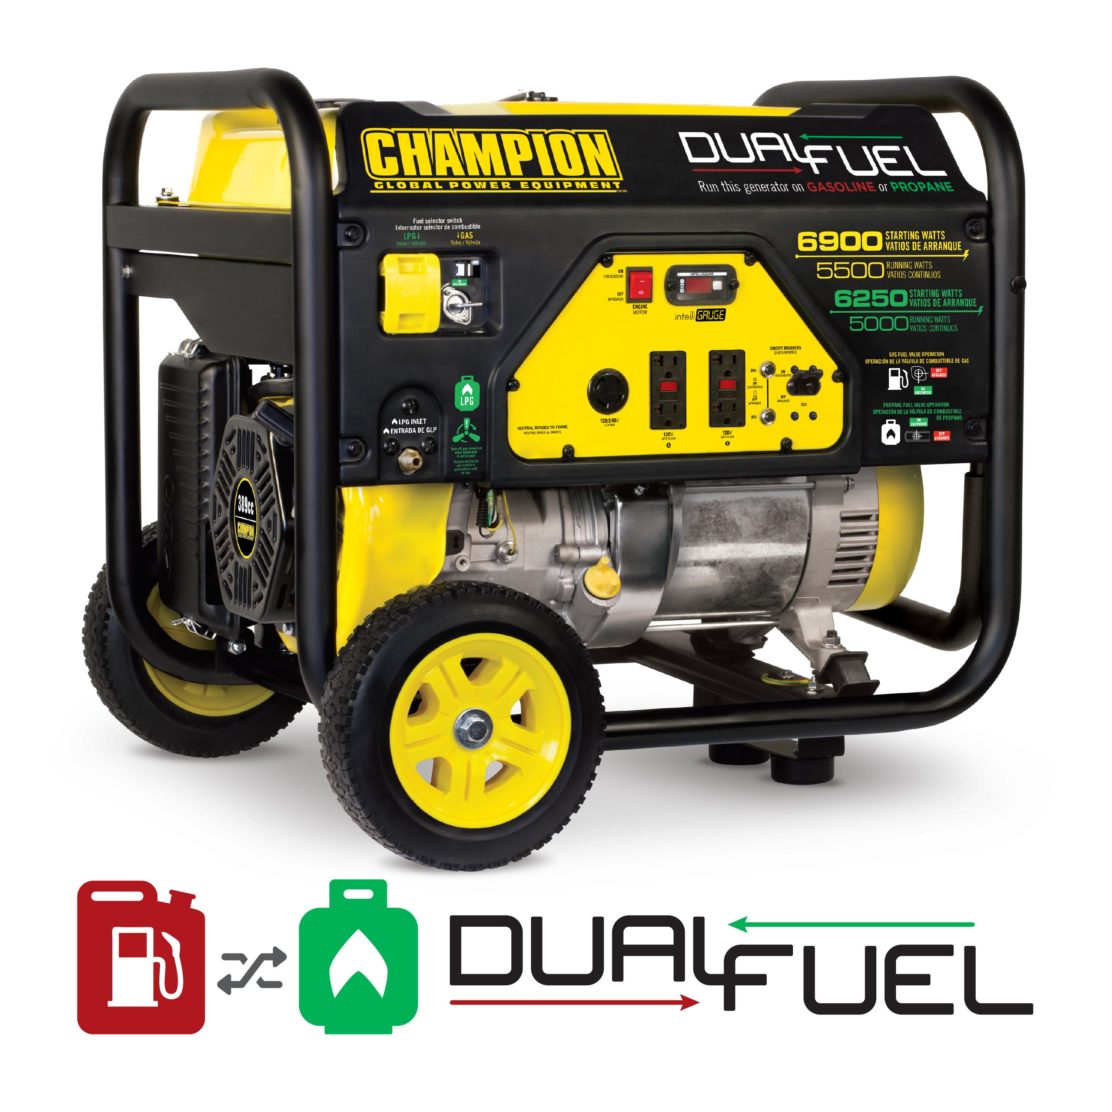 5500-watt-dual-fuel-generator – THE POWER OF CHAMPION 